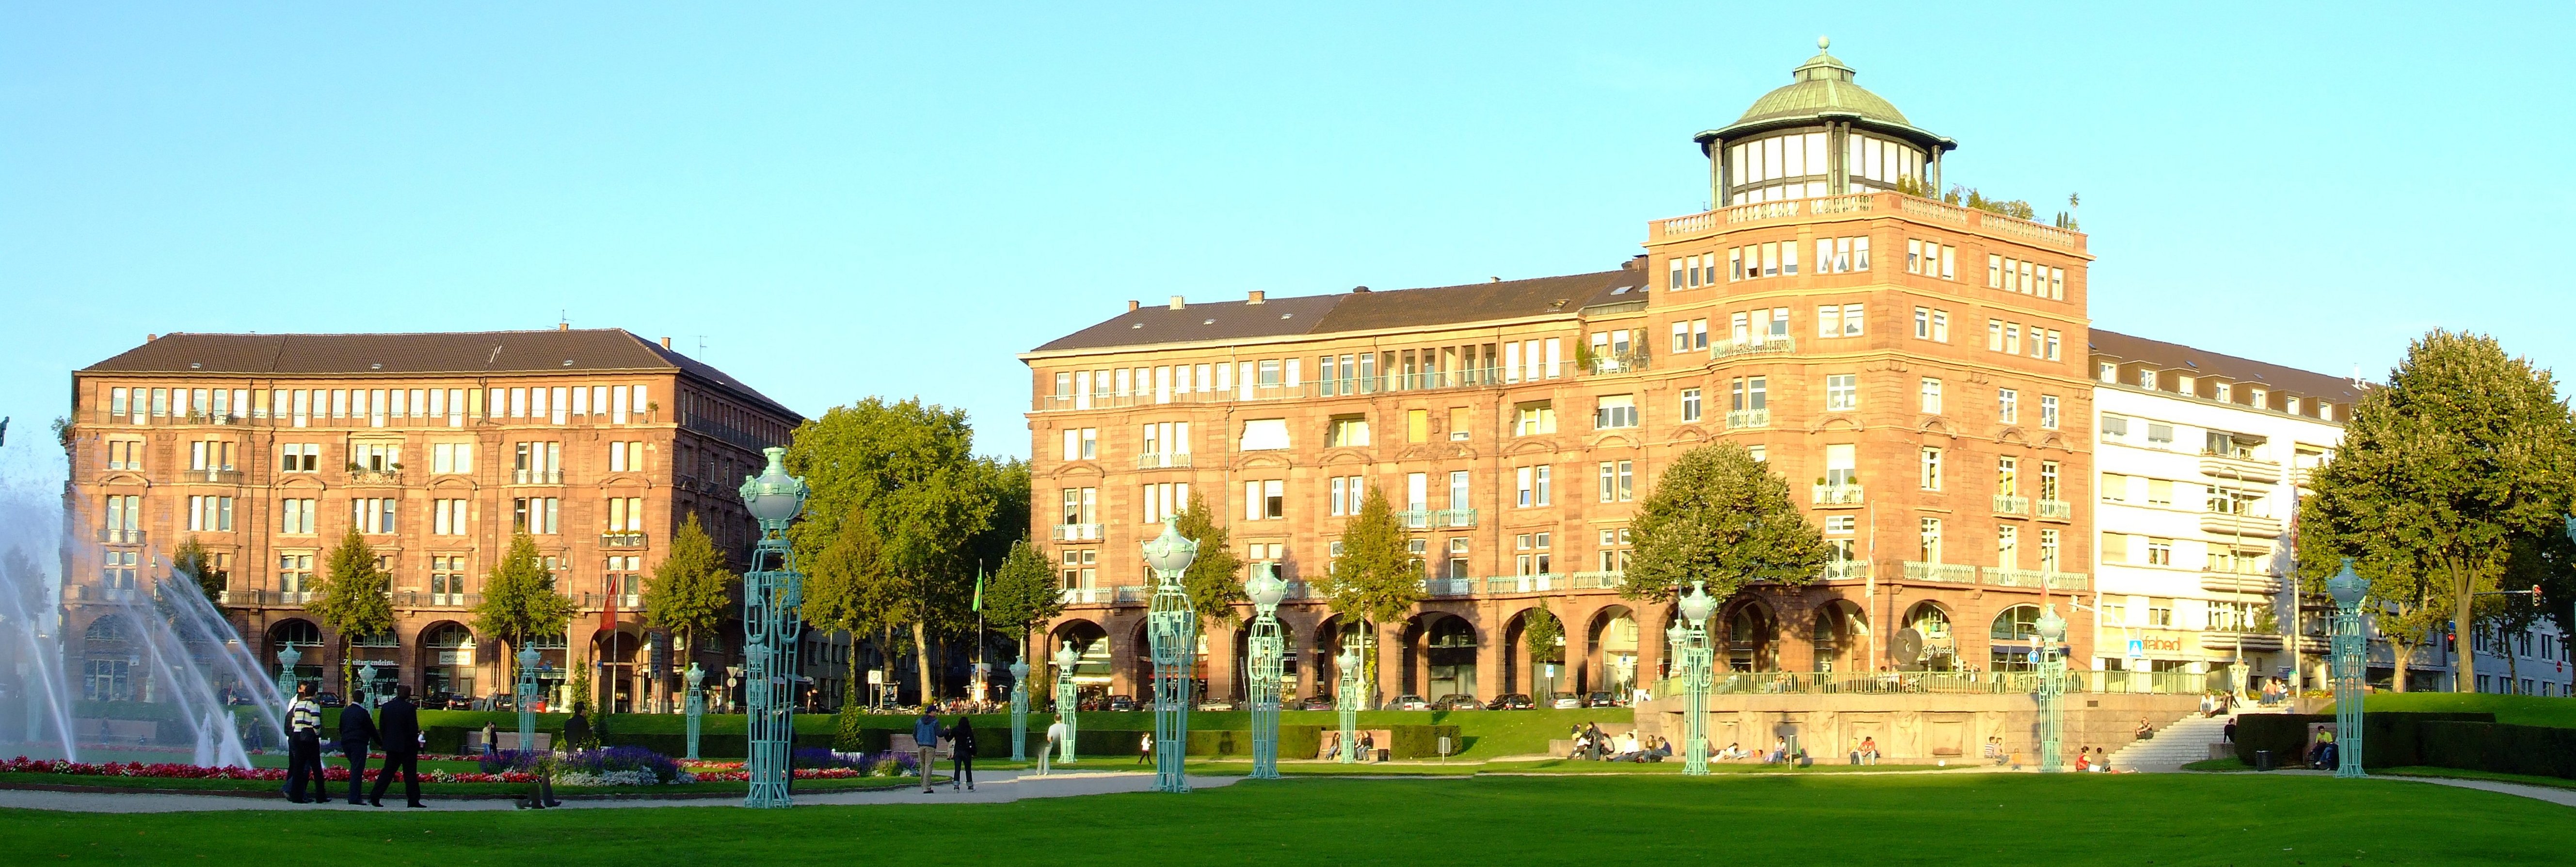 Datei:Mannheim Friedrichsplatz Panorama 1.jpg